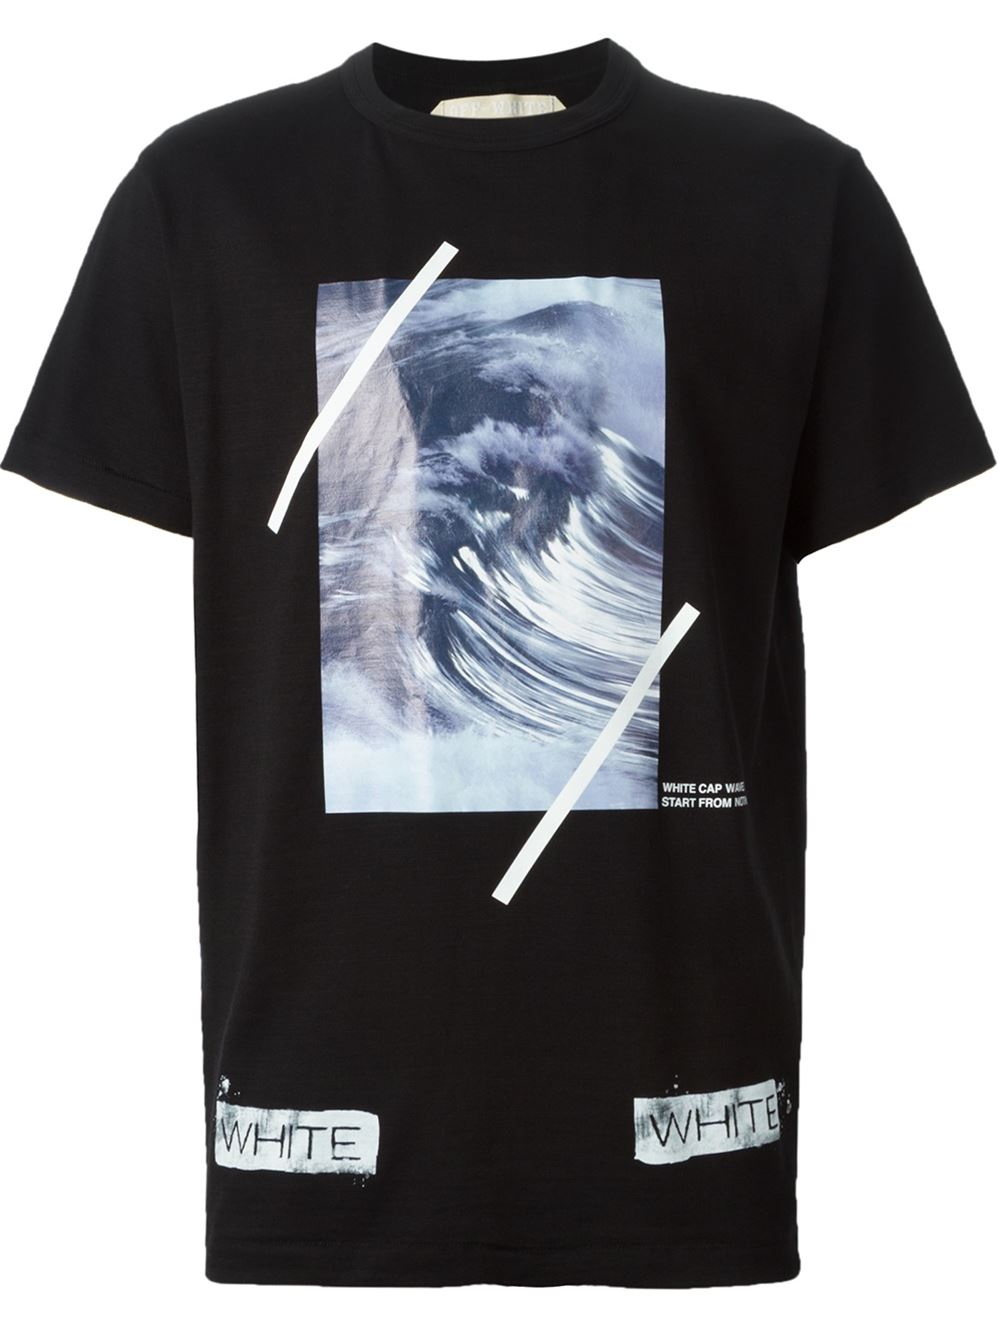 Amorous Ond undskyld Off-White c/o Virgil Abloh Wave Print T-Shirt in Black for Men - Lyst